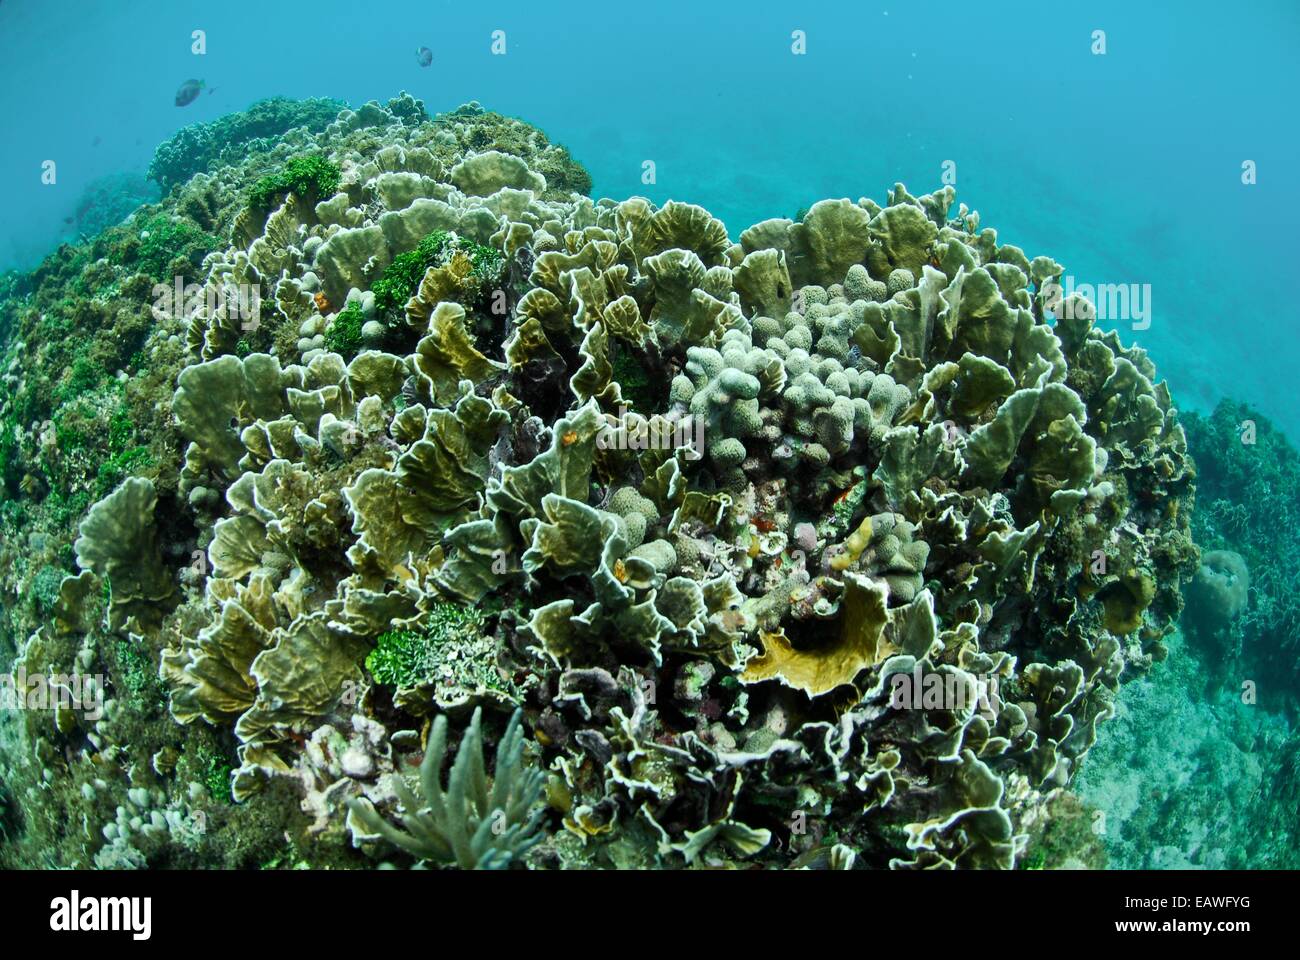 Hard corals grow in the Caribbean Sea. Stock Photo